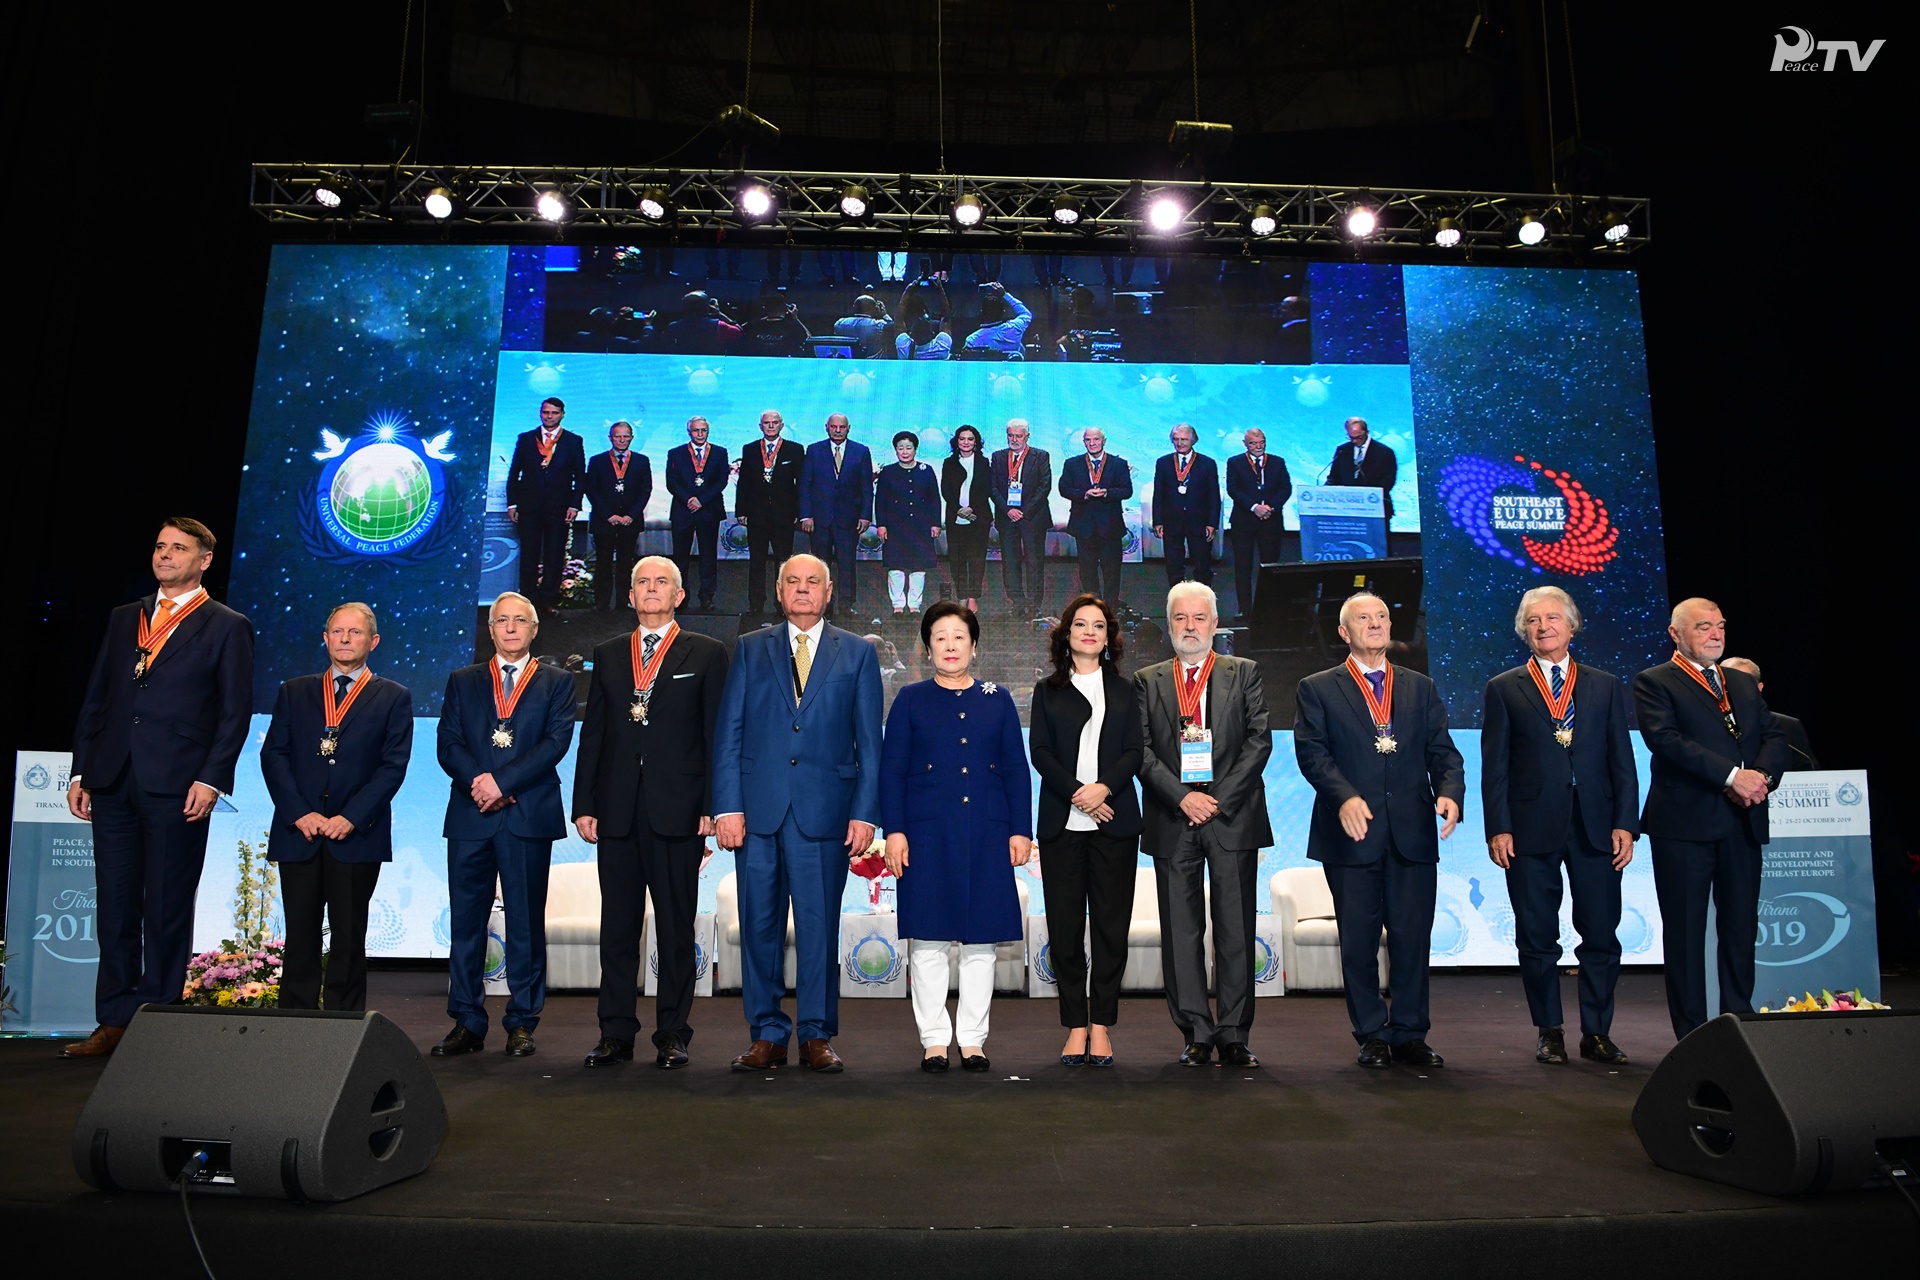 Opening of the Southeast European Peace Summit 2019 (26 October - Congress Palace, Tirana)